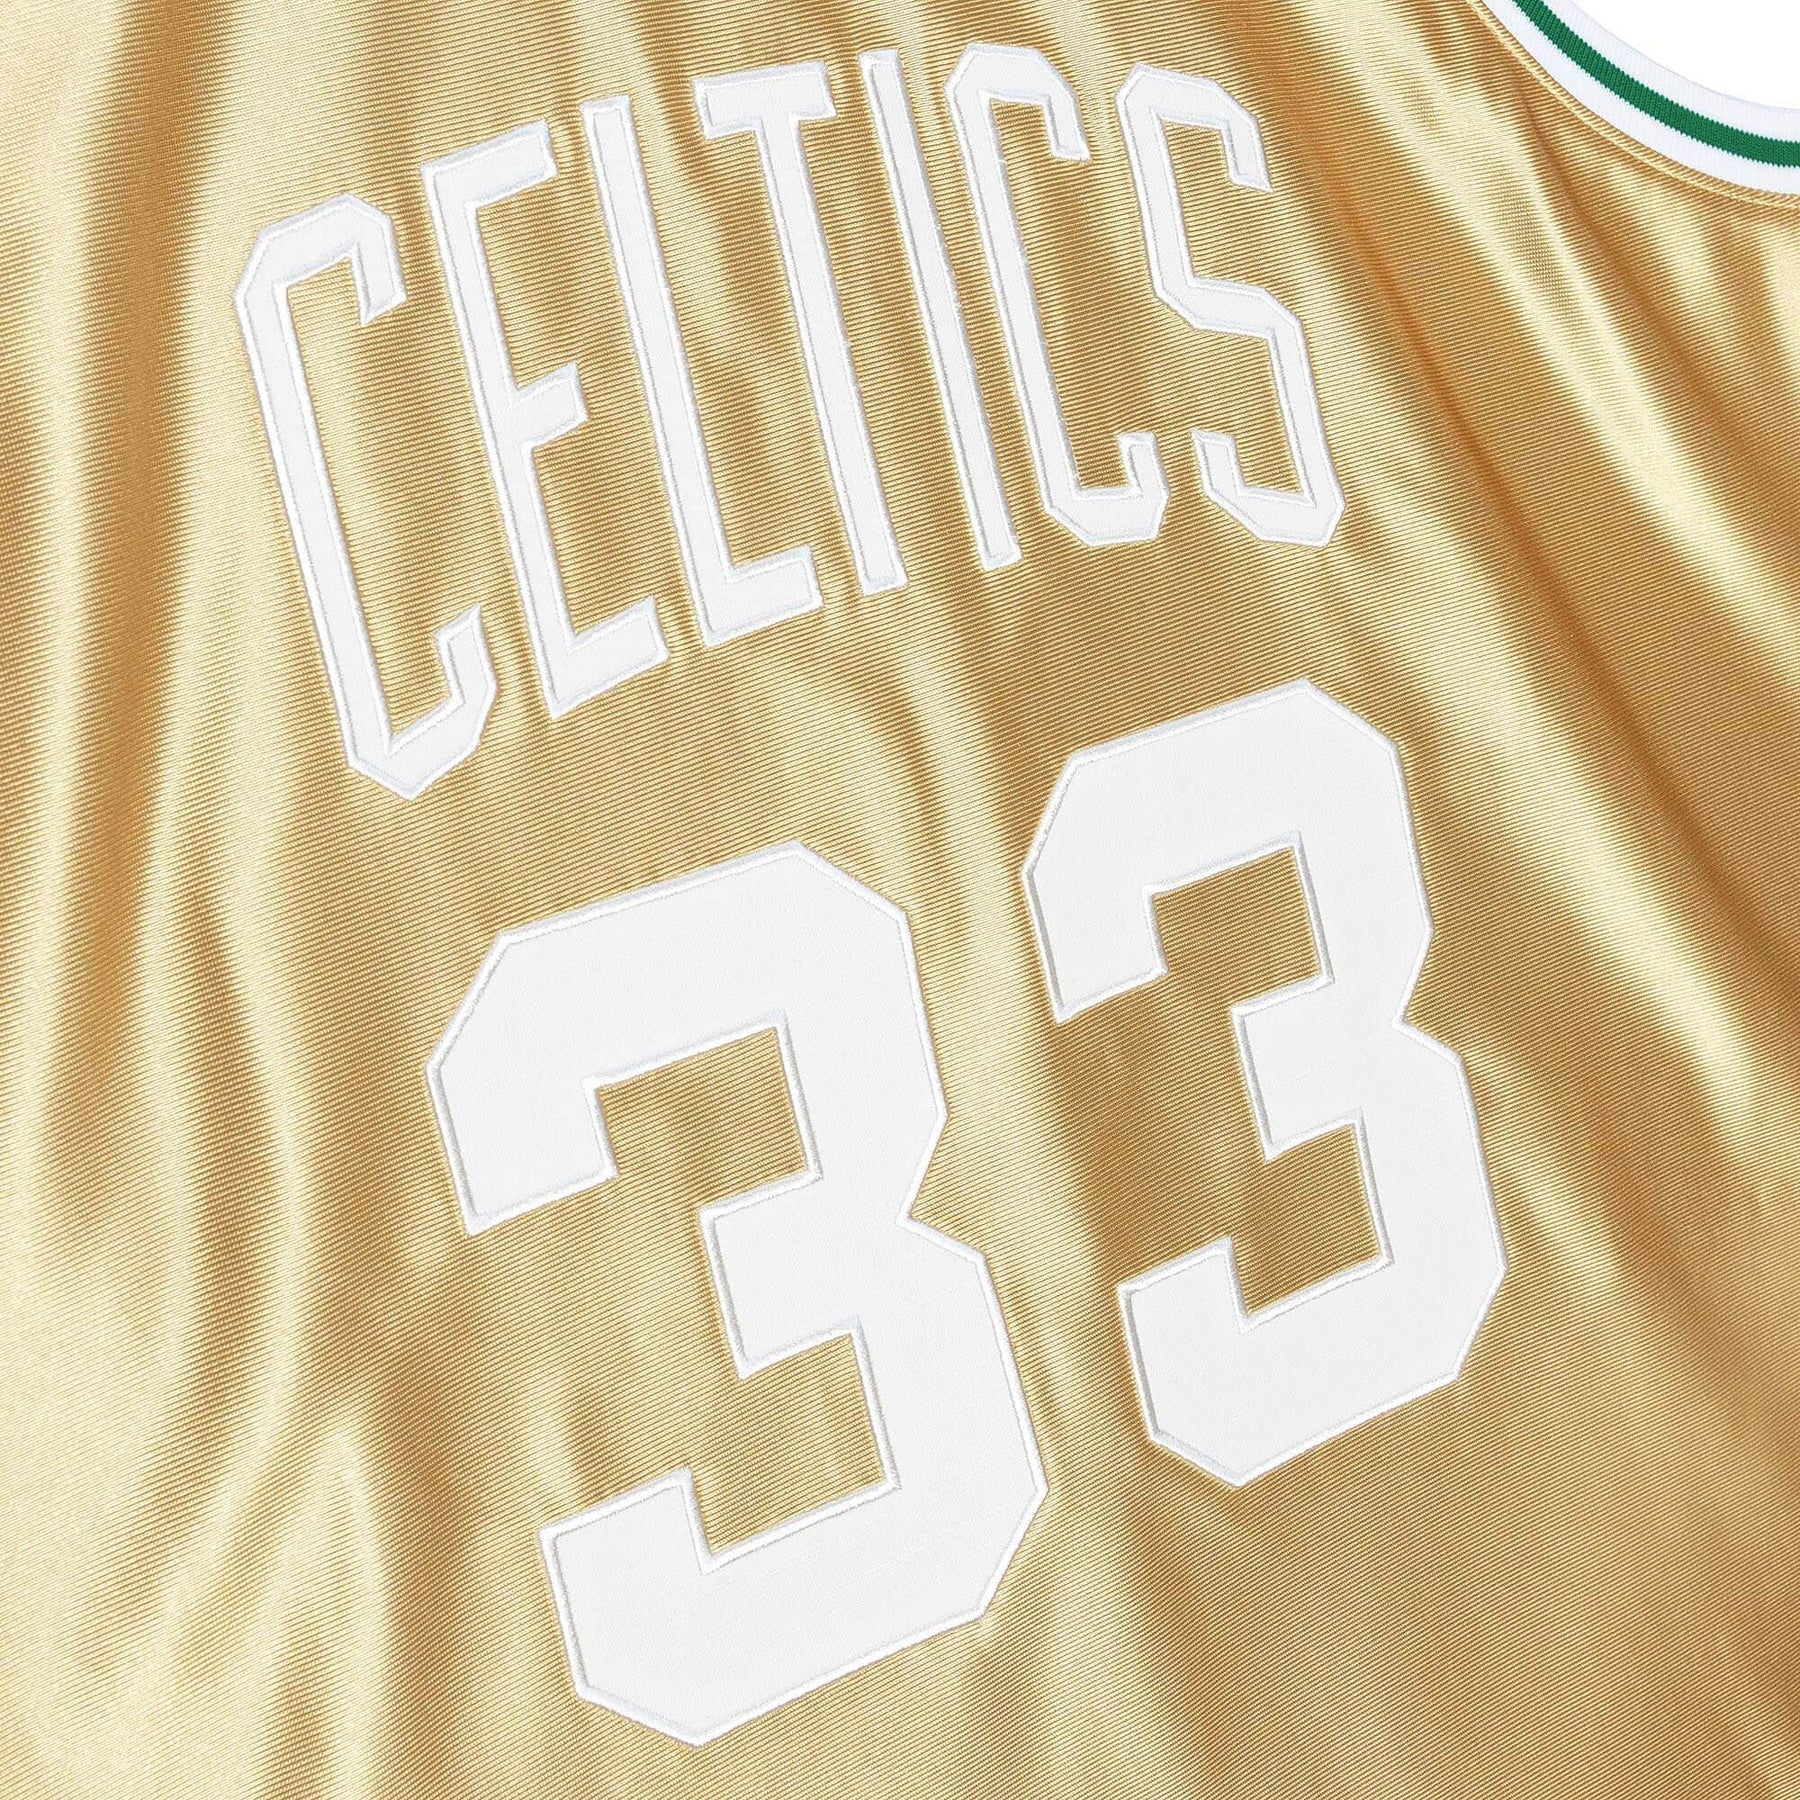 Boston Celtics Larry Bird Mitchell & Ness Gold NBA 75th Anniversary  Jersey XXL